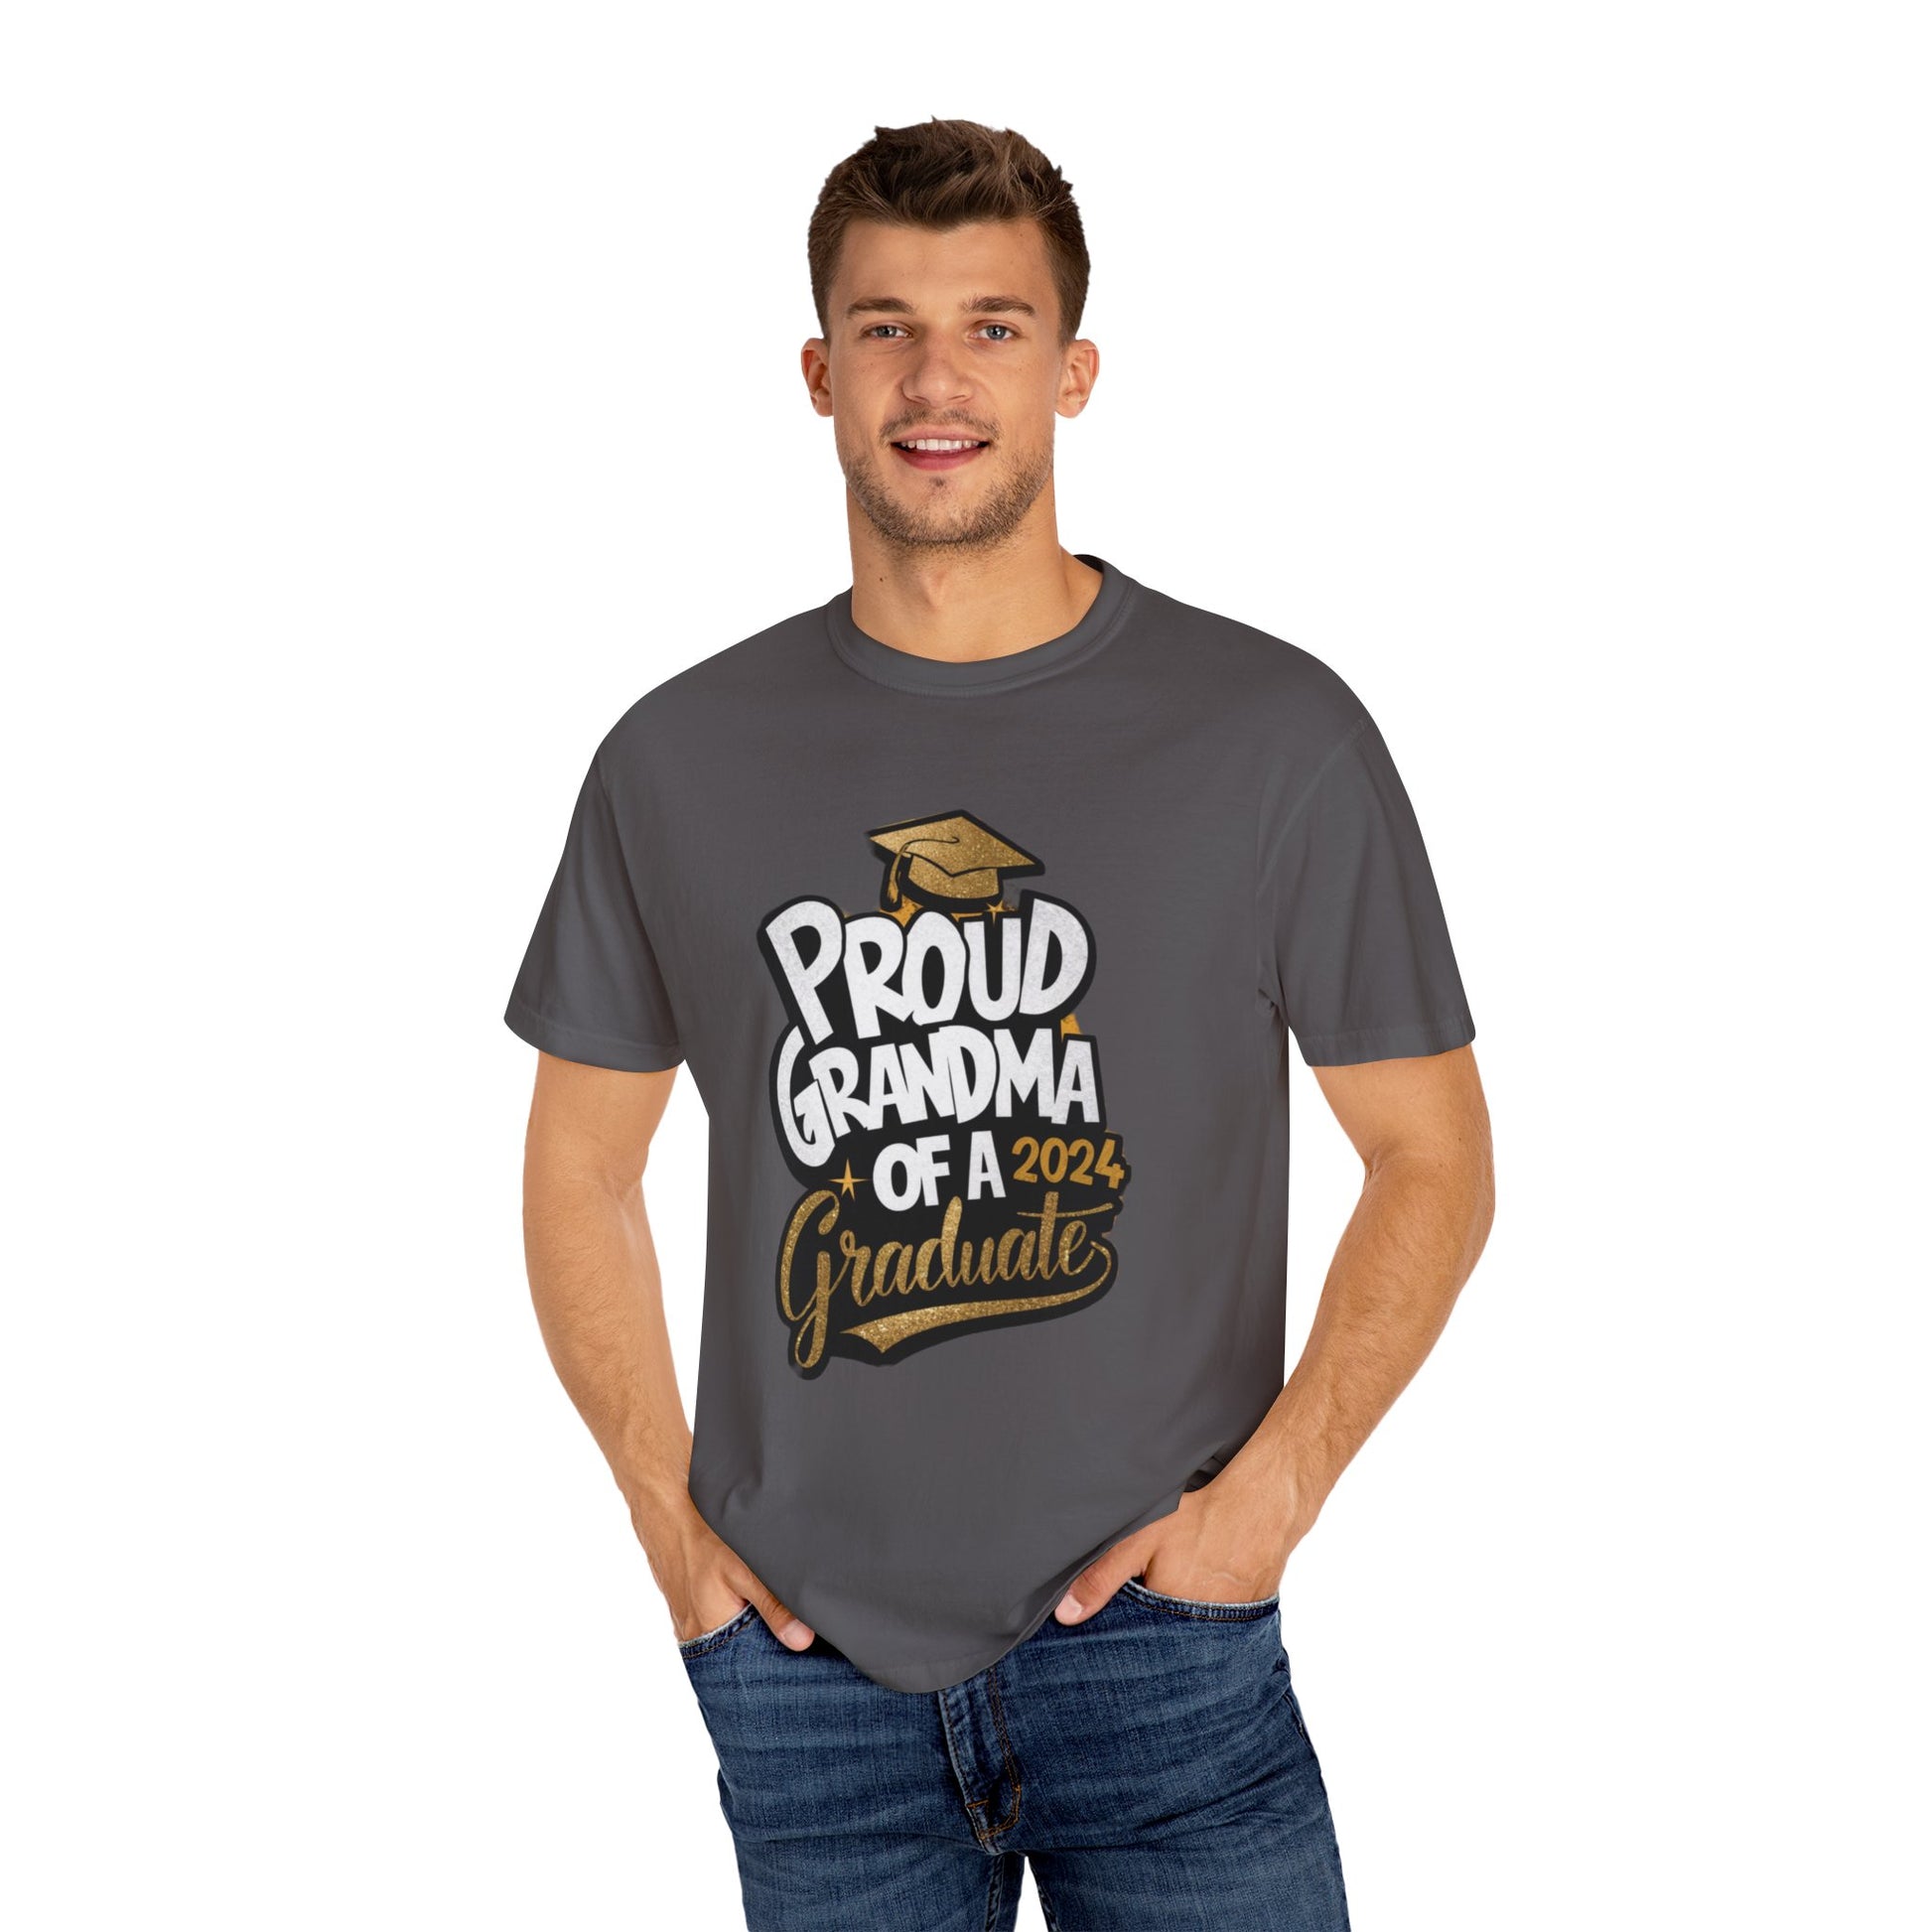 Proud of Grandma 2024 Graduate Unisex Garment-dyed T-shirt Cotton Funny Humorous Graphic Soft Premium Unisex Men Women Graphite T-shirt Birthday Gift-39